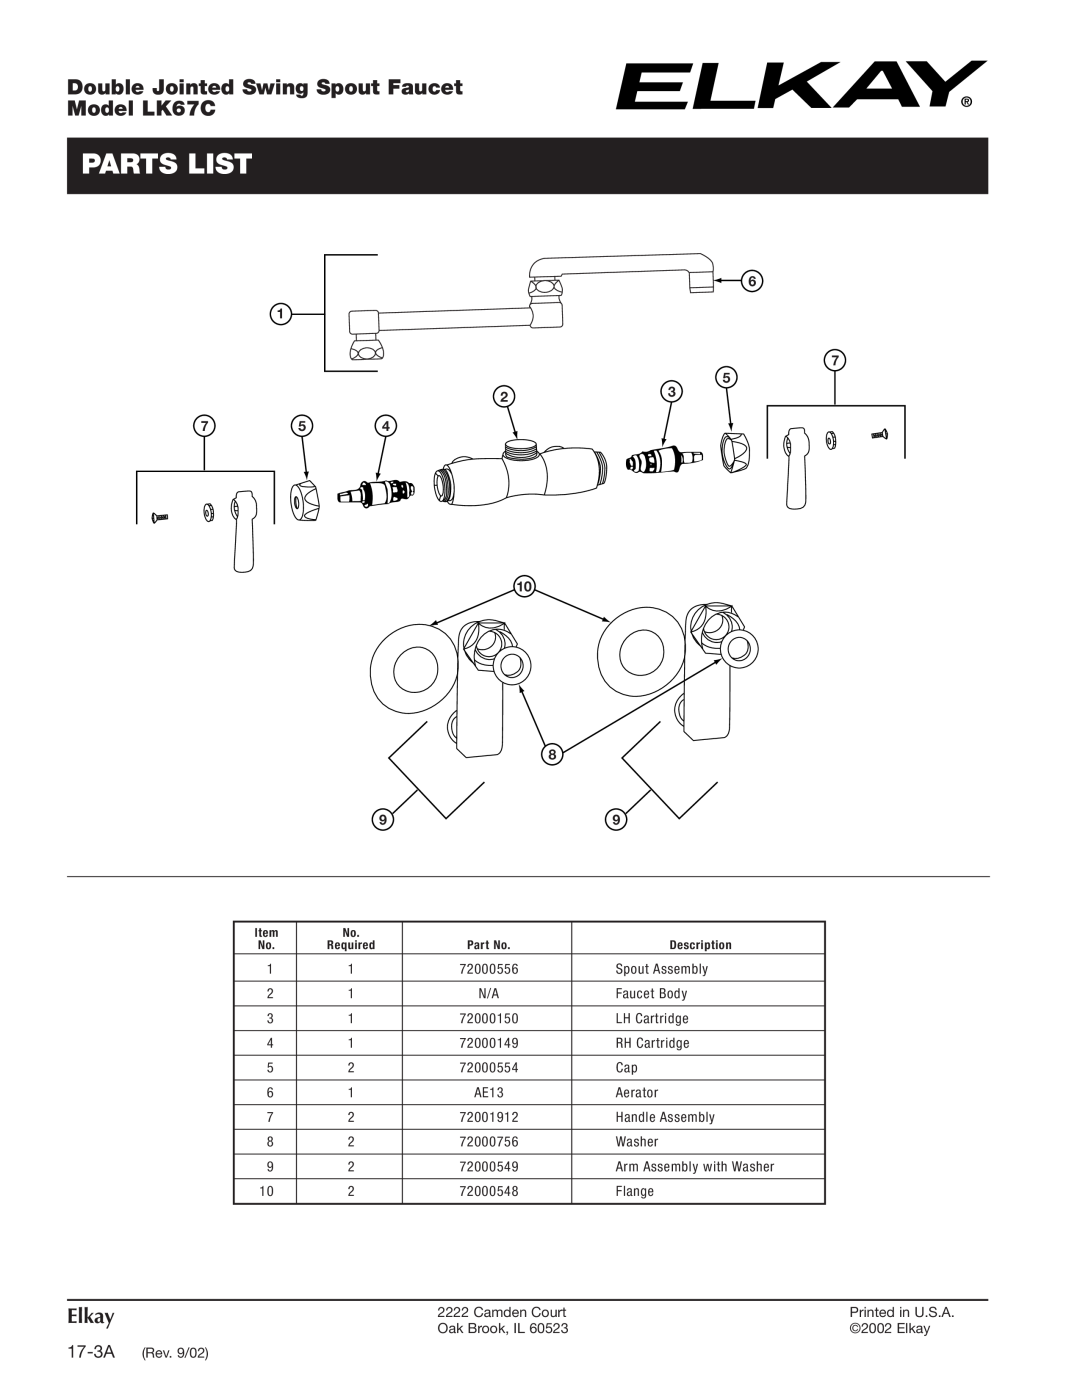 Elkay specifications Parts List, Double Jointed Swing Spout Faucet, Model LK67C, Elkay, 6 7 